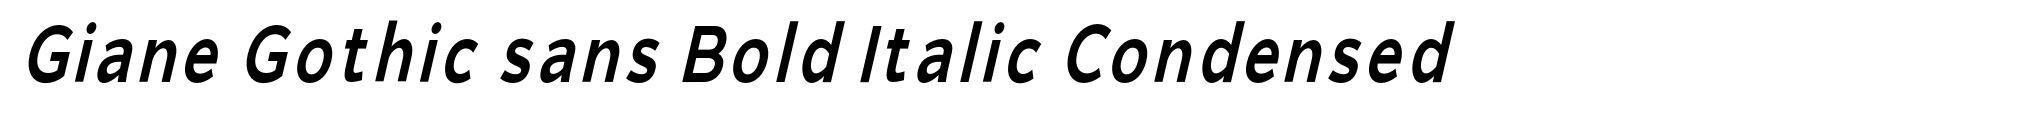 Giane Gothic sans Bold Italic Condensed image